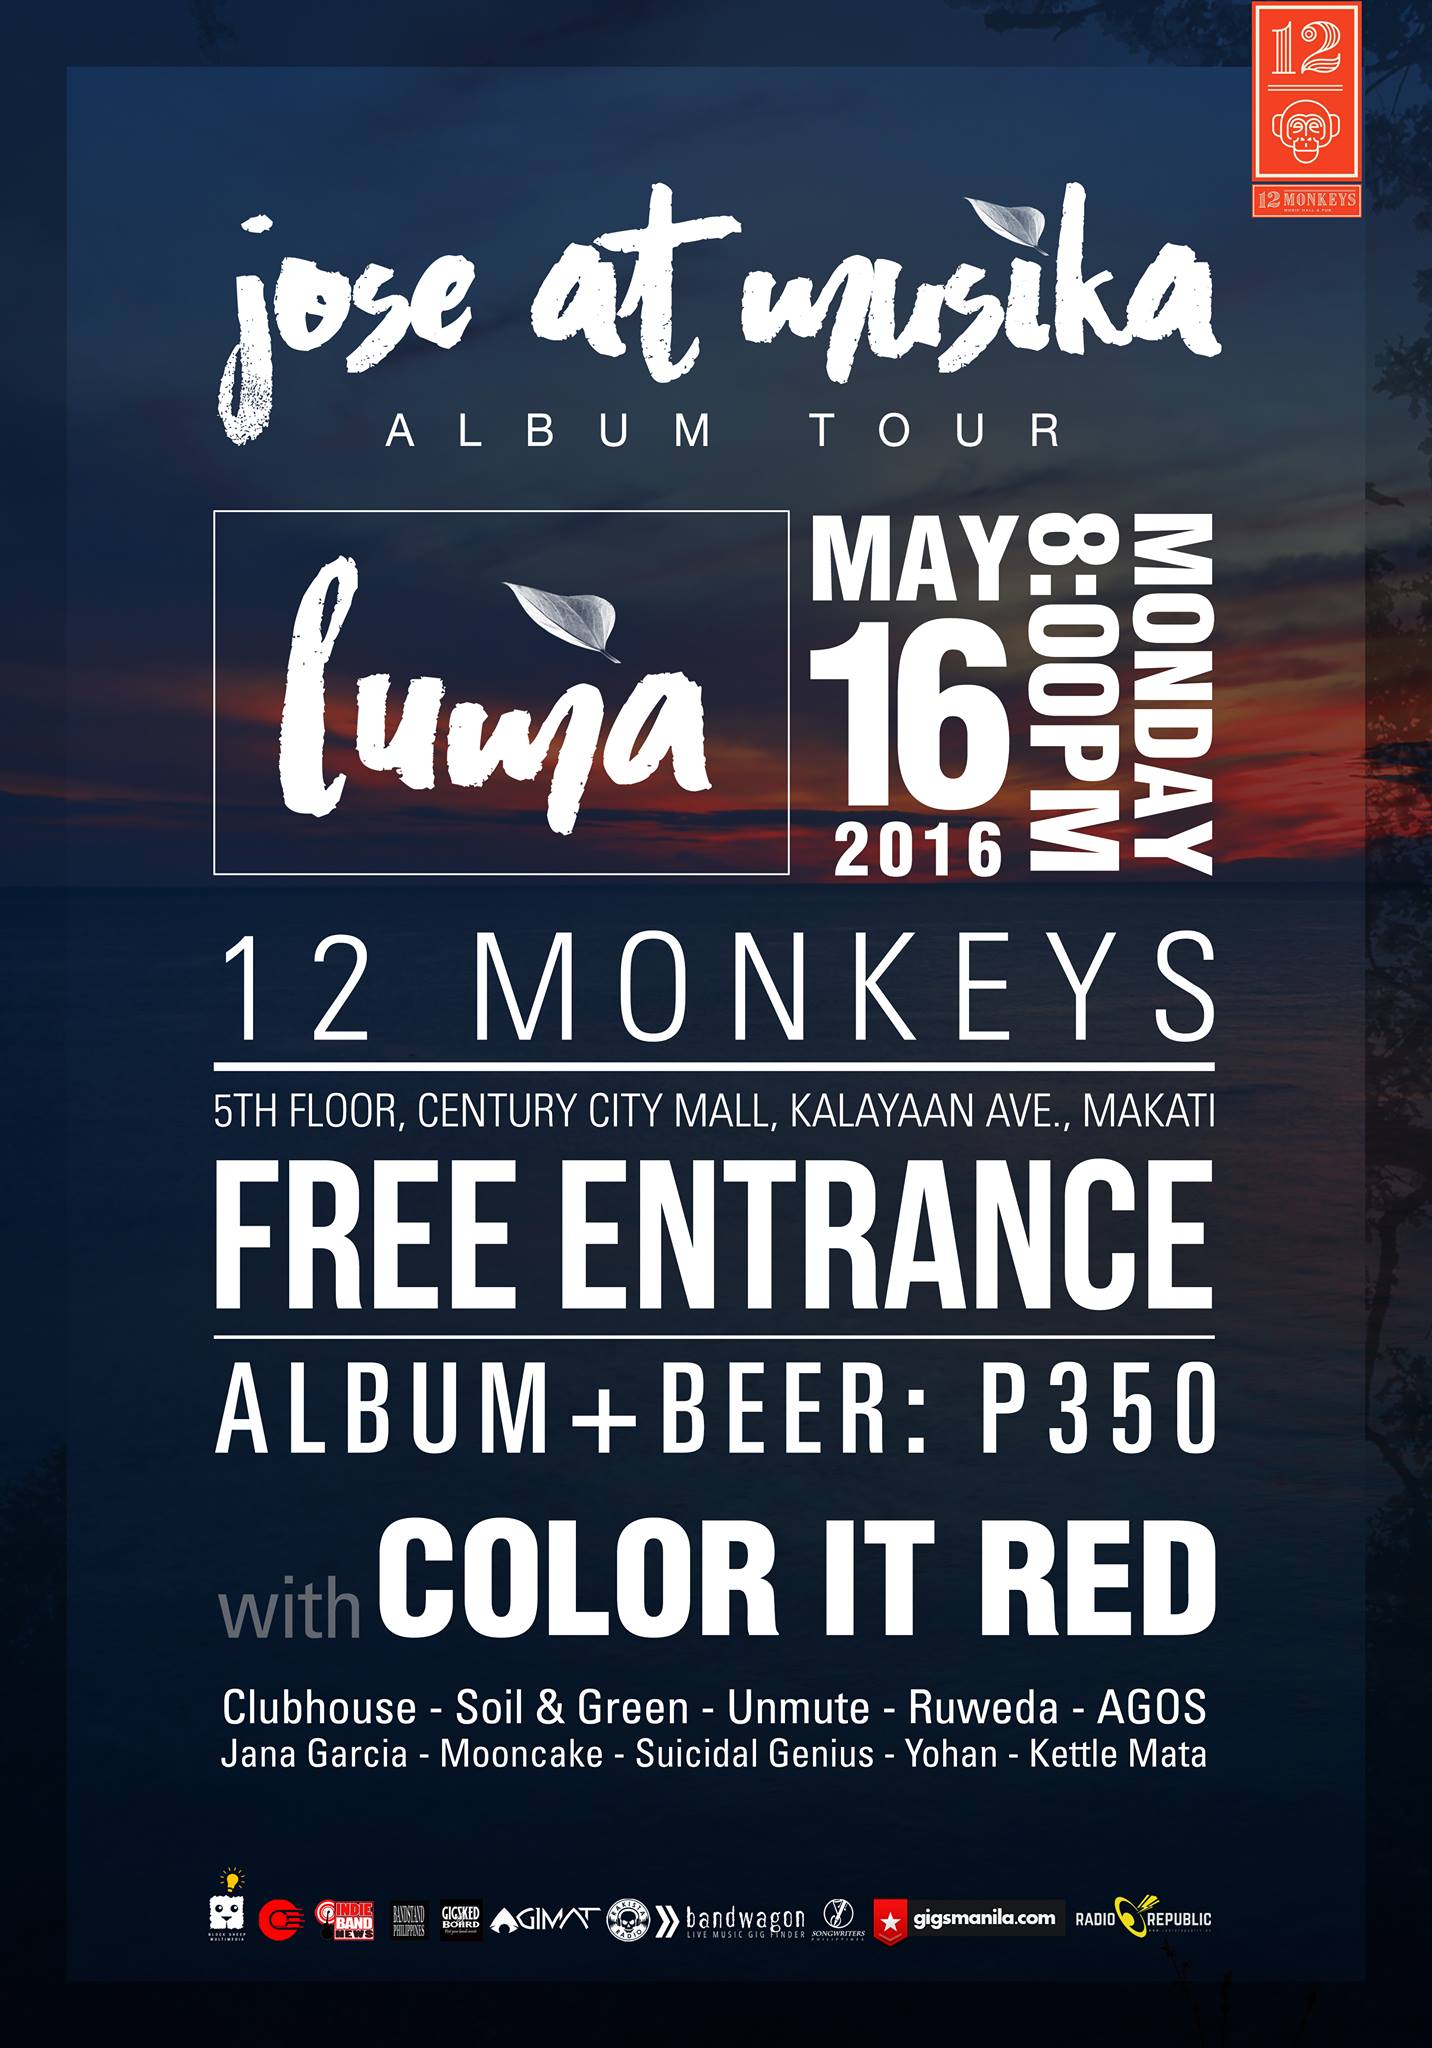 Jose at Musika LUMA: Album Tour May 16, Monday - 8:00pm Venue: 12 Monkeys 5th Flr., Century City Mall, Kalayaan Ave., Makati FREE ENTRANCE!!! FREE ENTRANCE!!! FREE ENTRANCE!!! * Album + Beer: P350 performances by: Color It Red Clubhouse Soil & Green Unmute Jana Garcia AGOS Ruweda Suicidal Genius Yohan Mooncake Kettle Mata Event Link: https://www.facebook.com/events/1529054764064342/